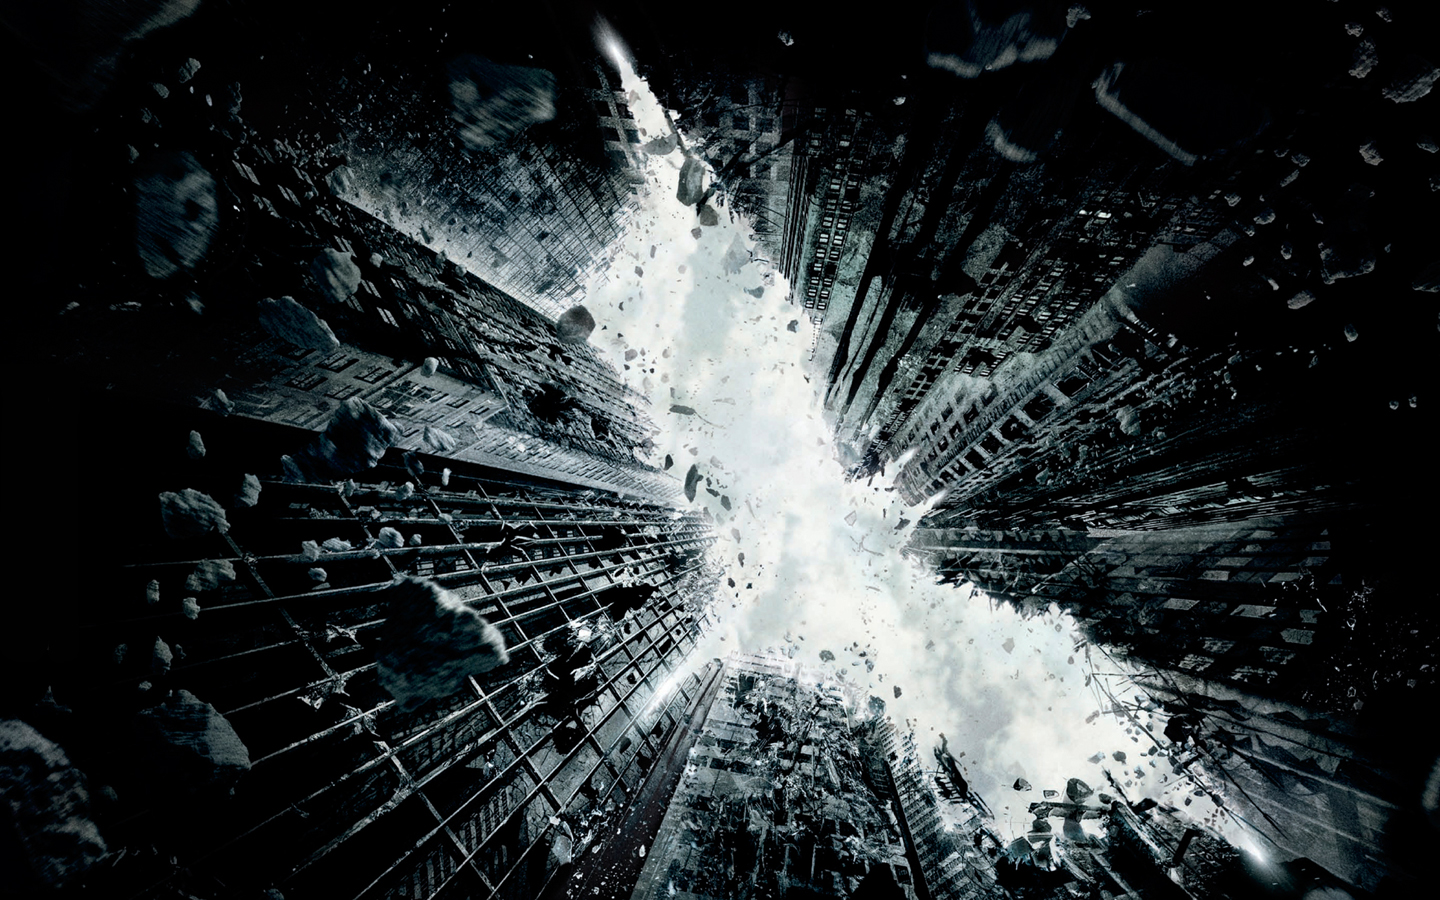 Batman The Dark Knight Rises 2012 HD Poster Wallpapers